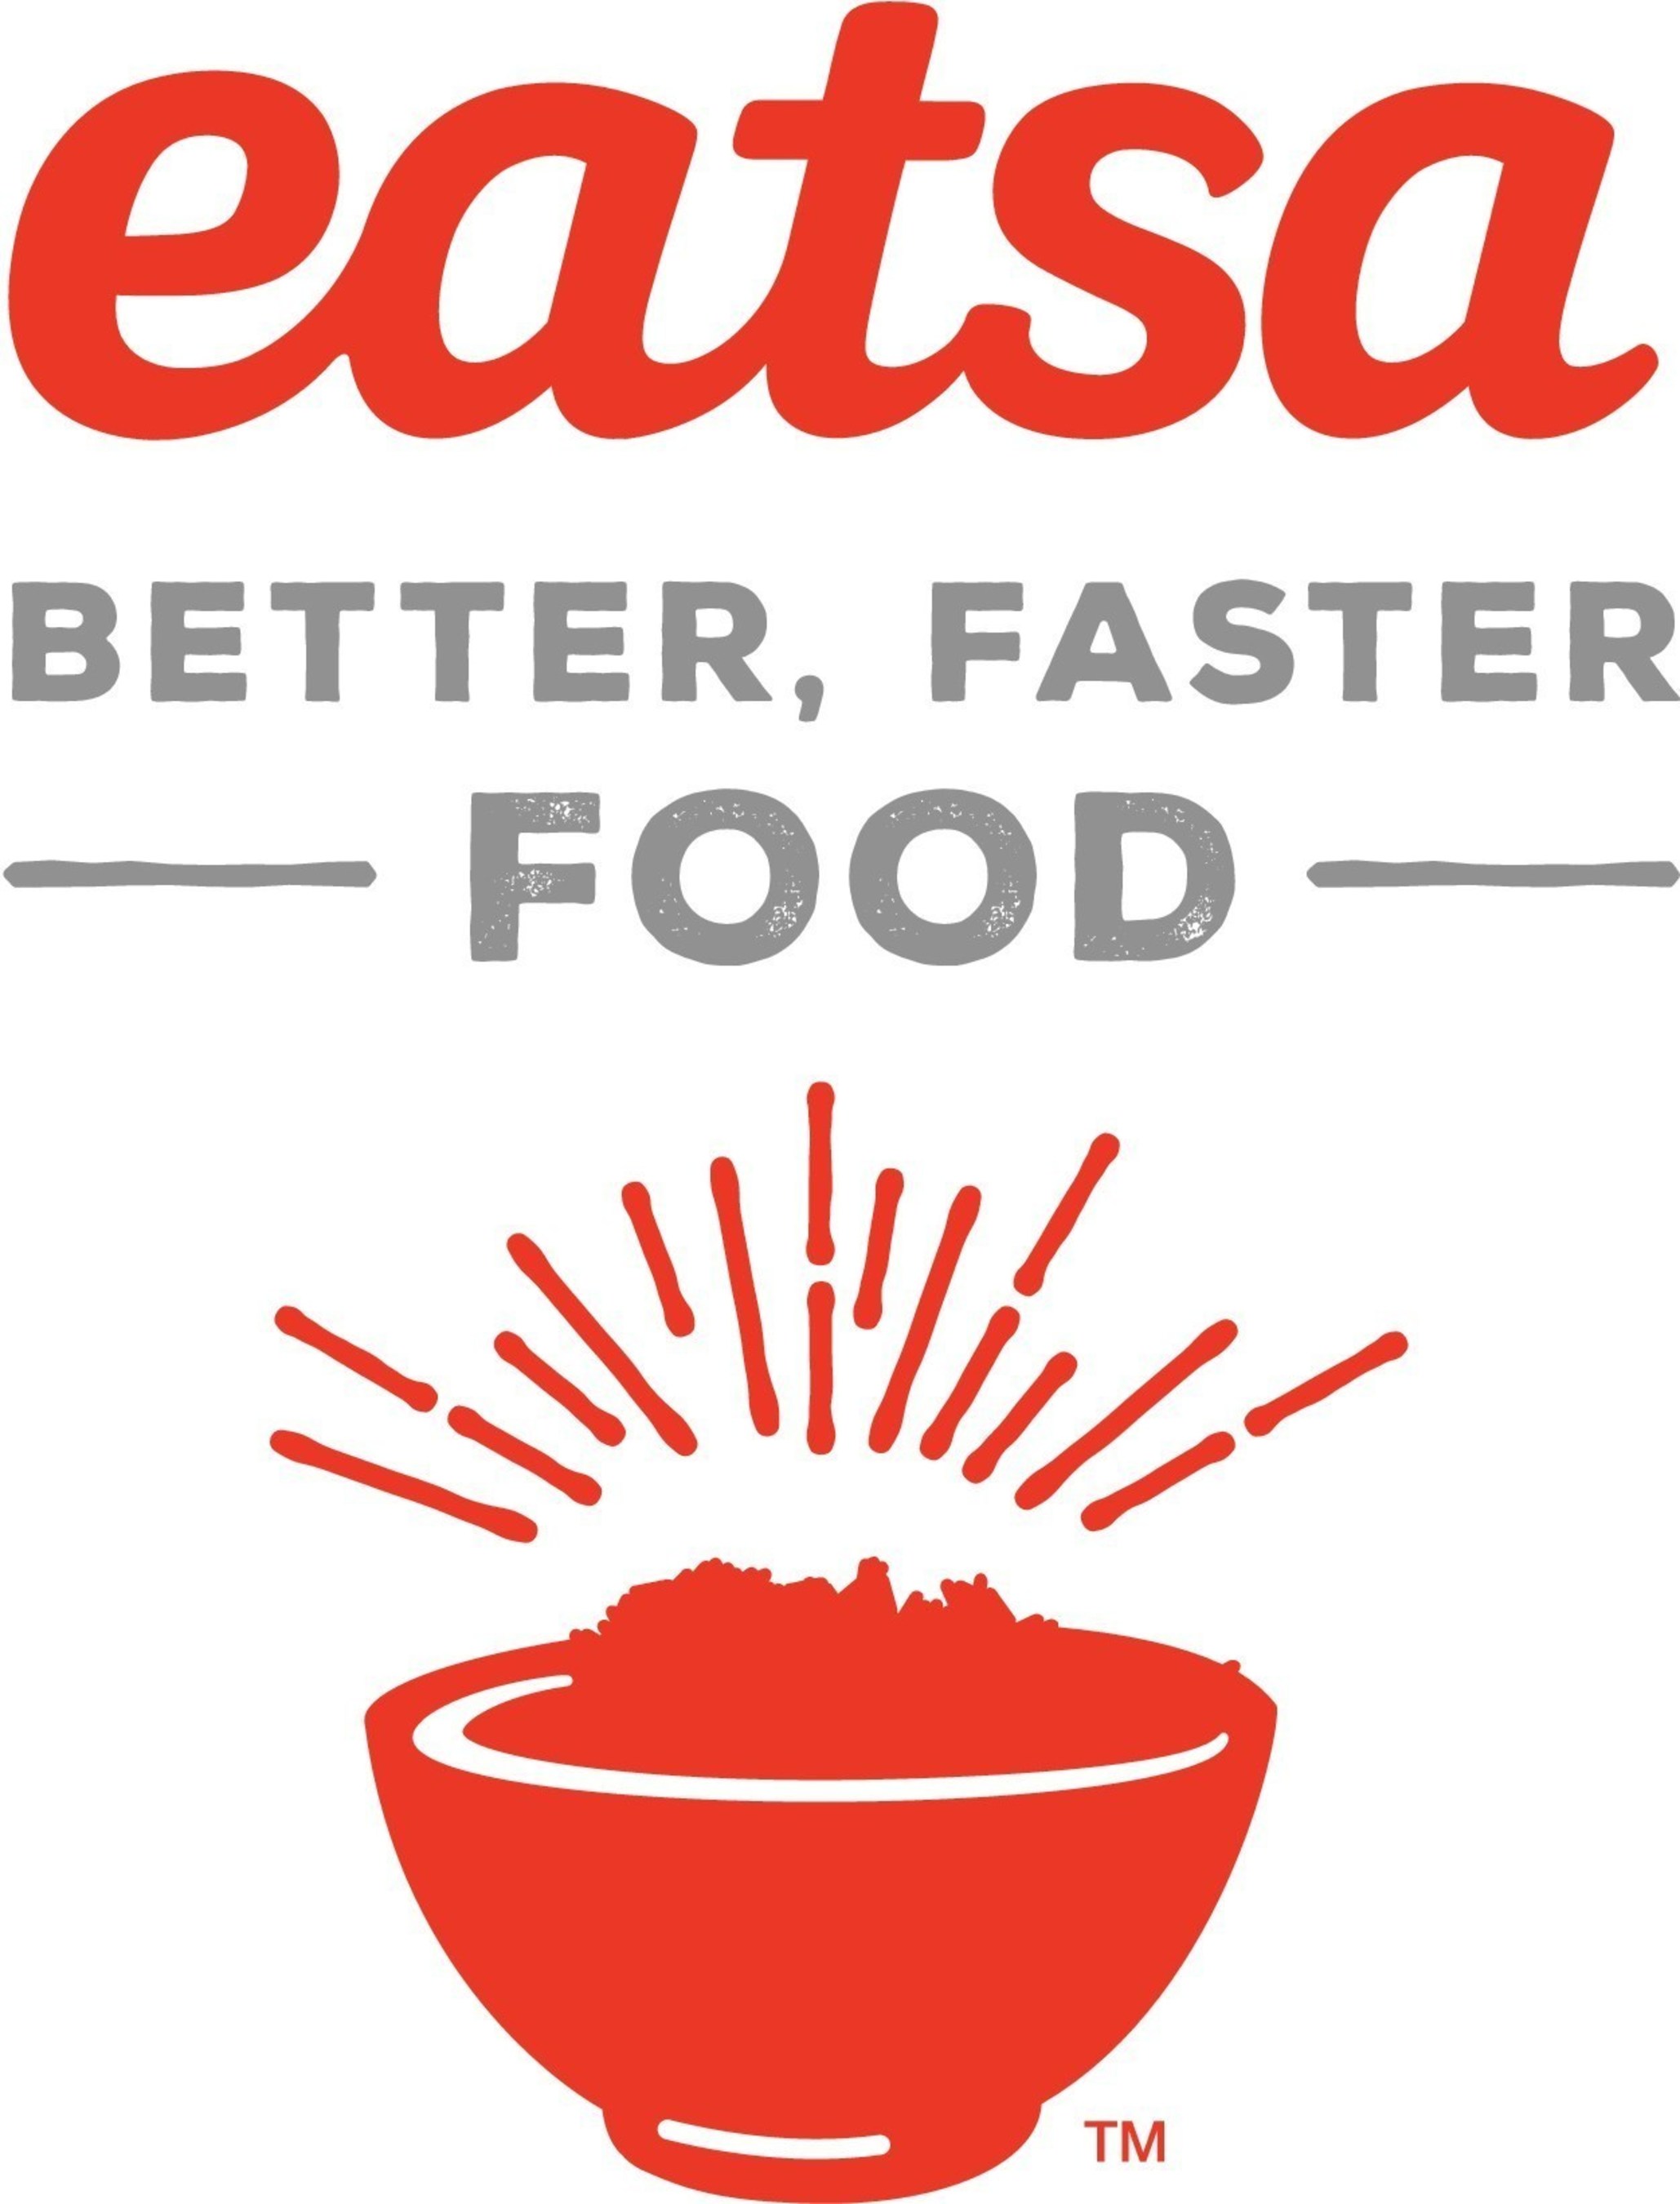 eatsa opens in downtown San Francisco.